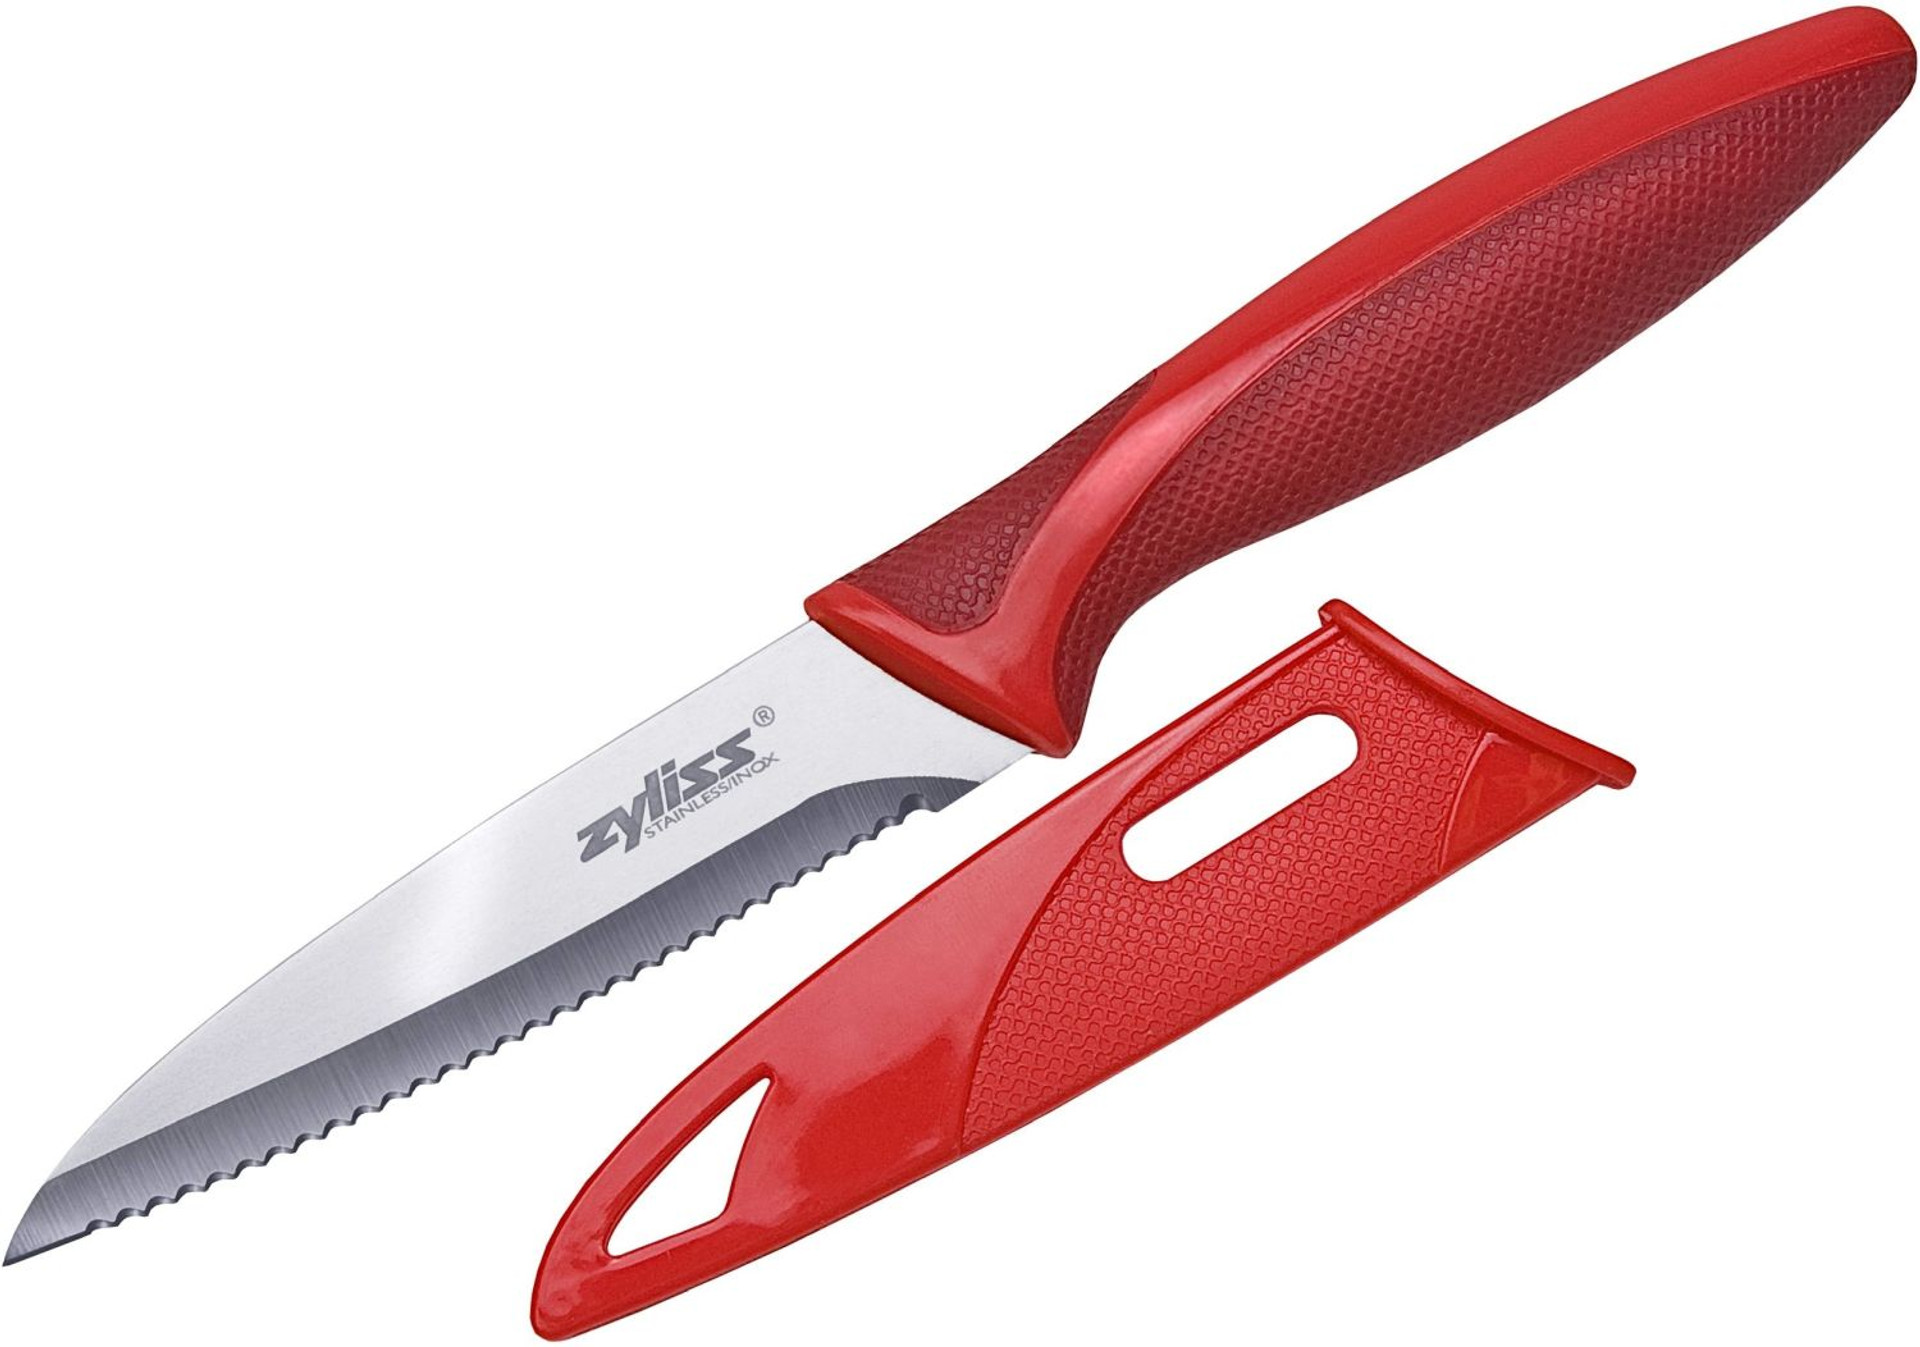 Zyliss 3pce Knife Set - Home Hardware Direct